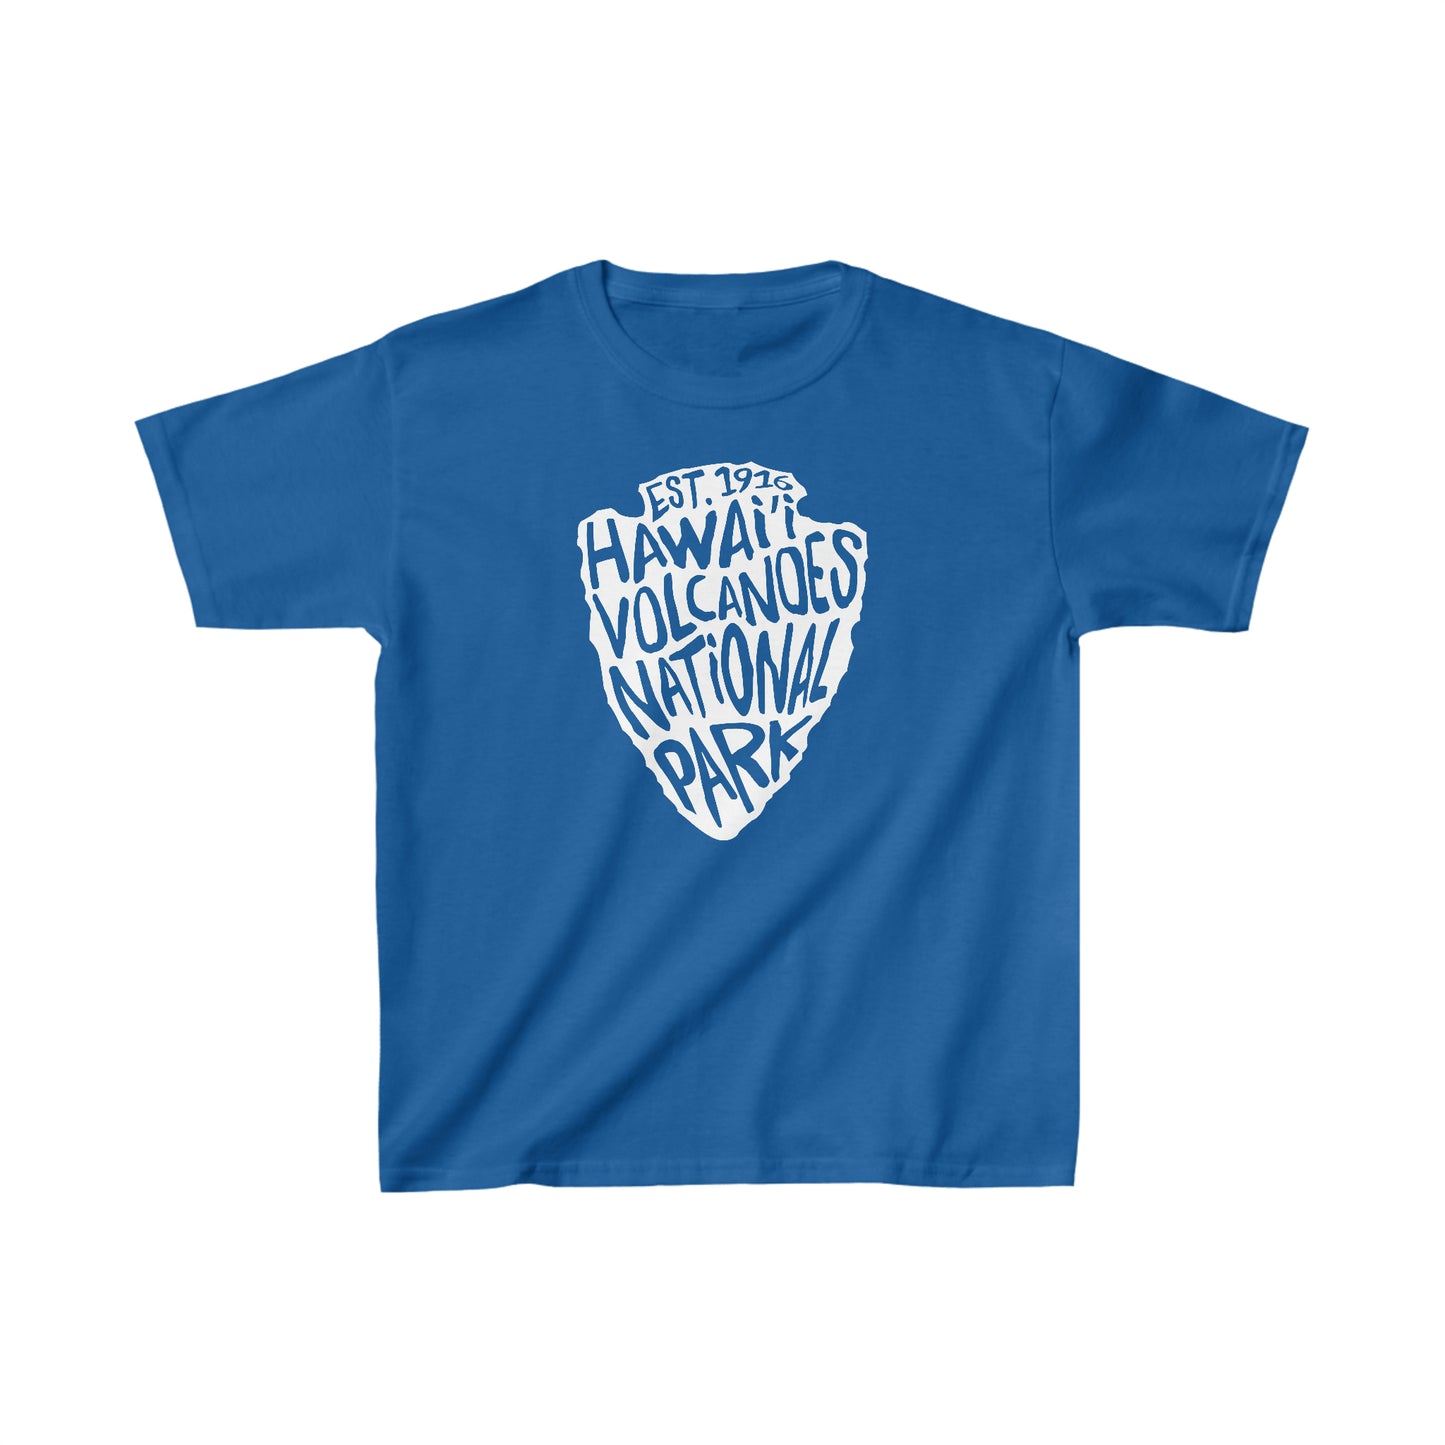 Hawaii Volcanoes National Park Child T-Shirt - Arrowhead Design